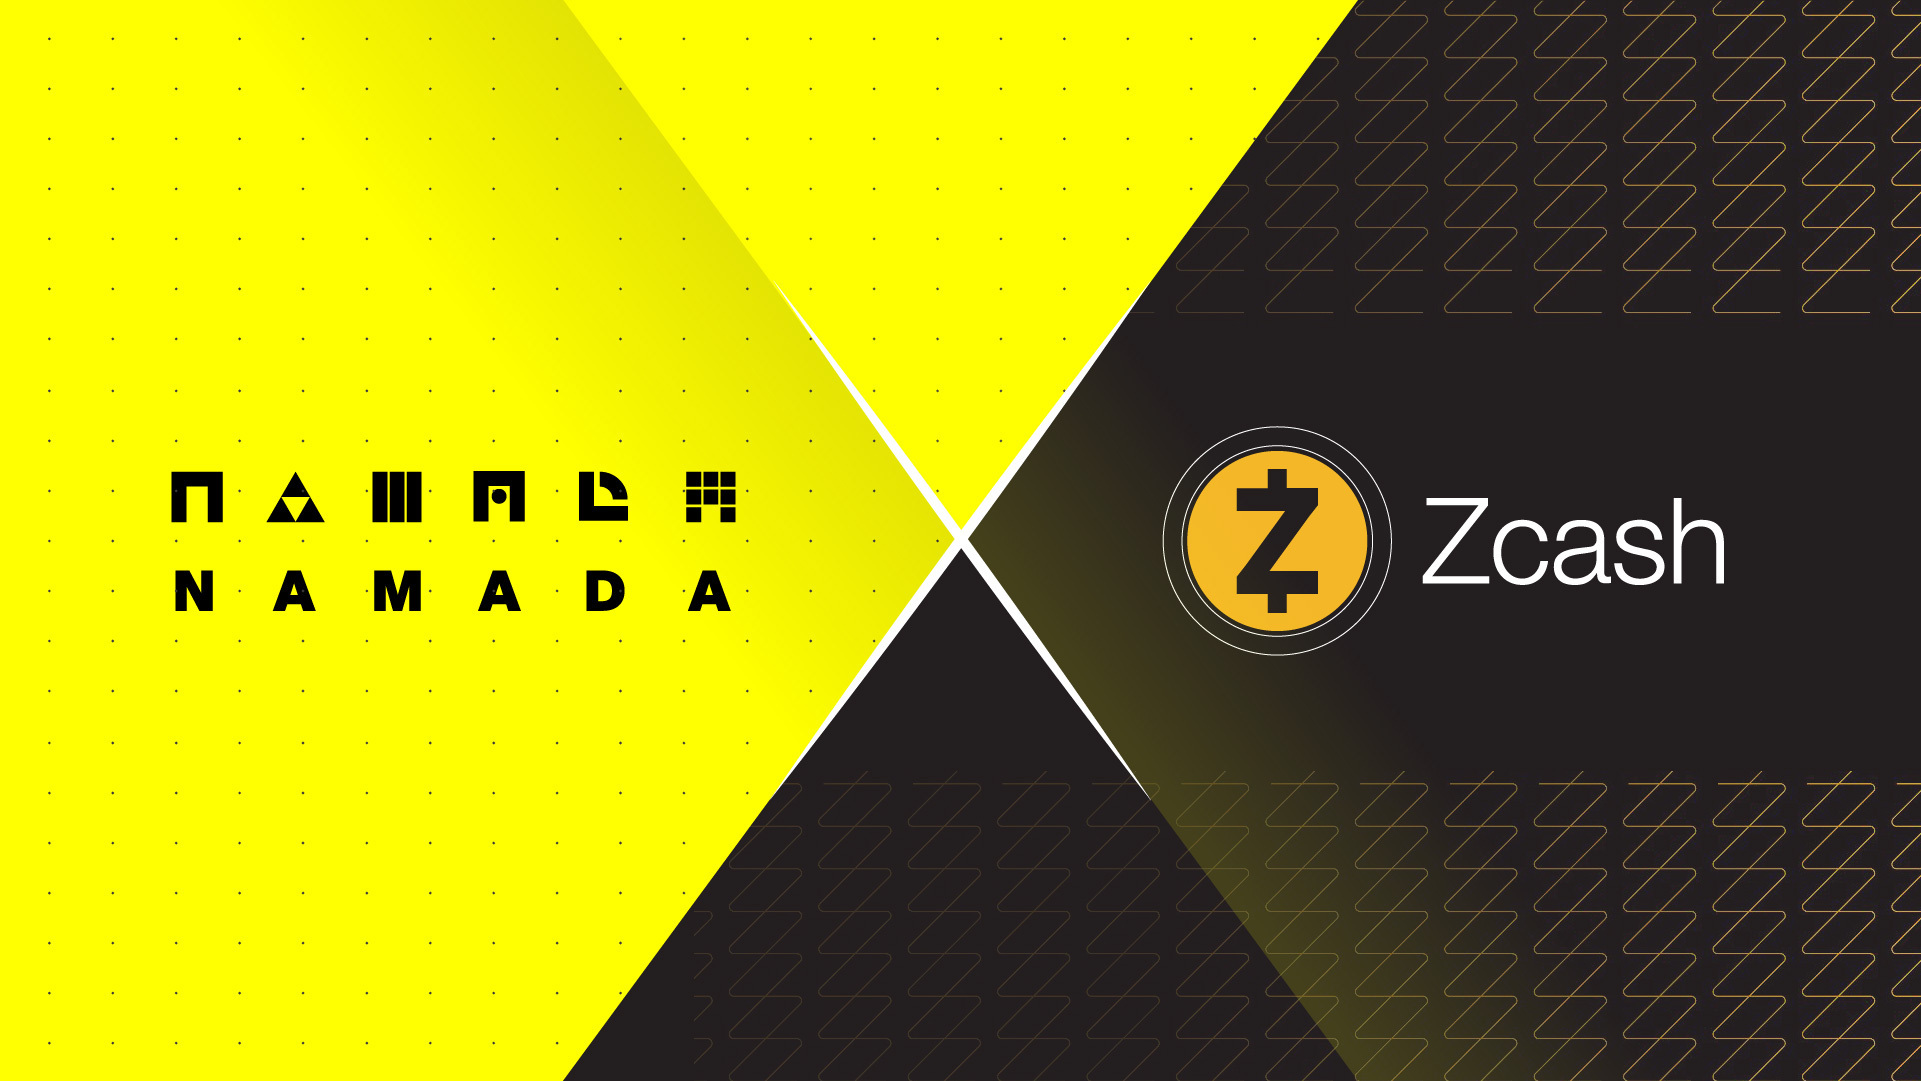 Multichain Privacy Protocol Namada Proposes a Strategic Alliance With Zcash